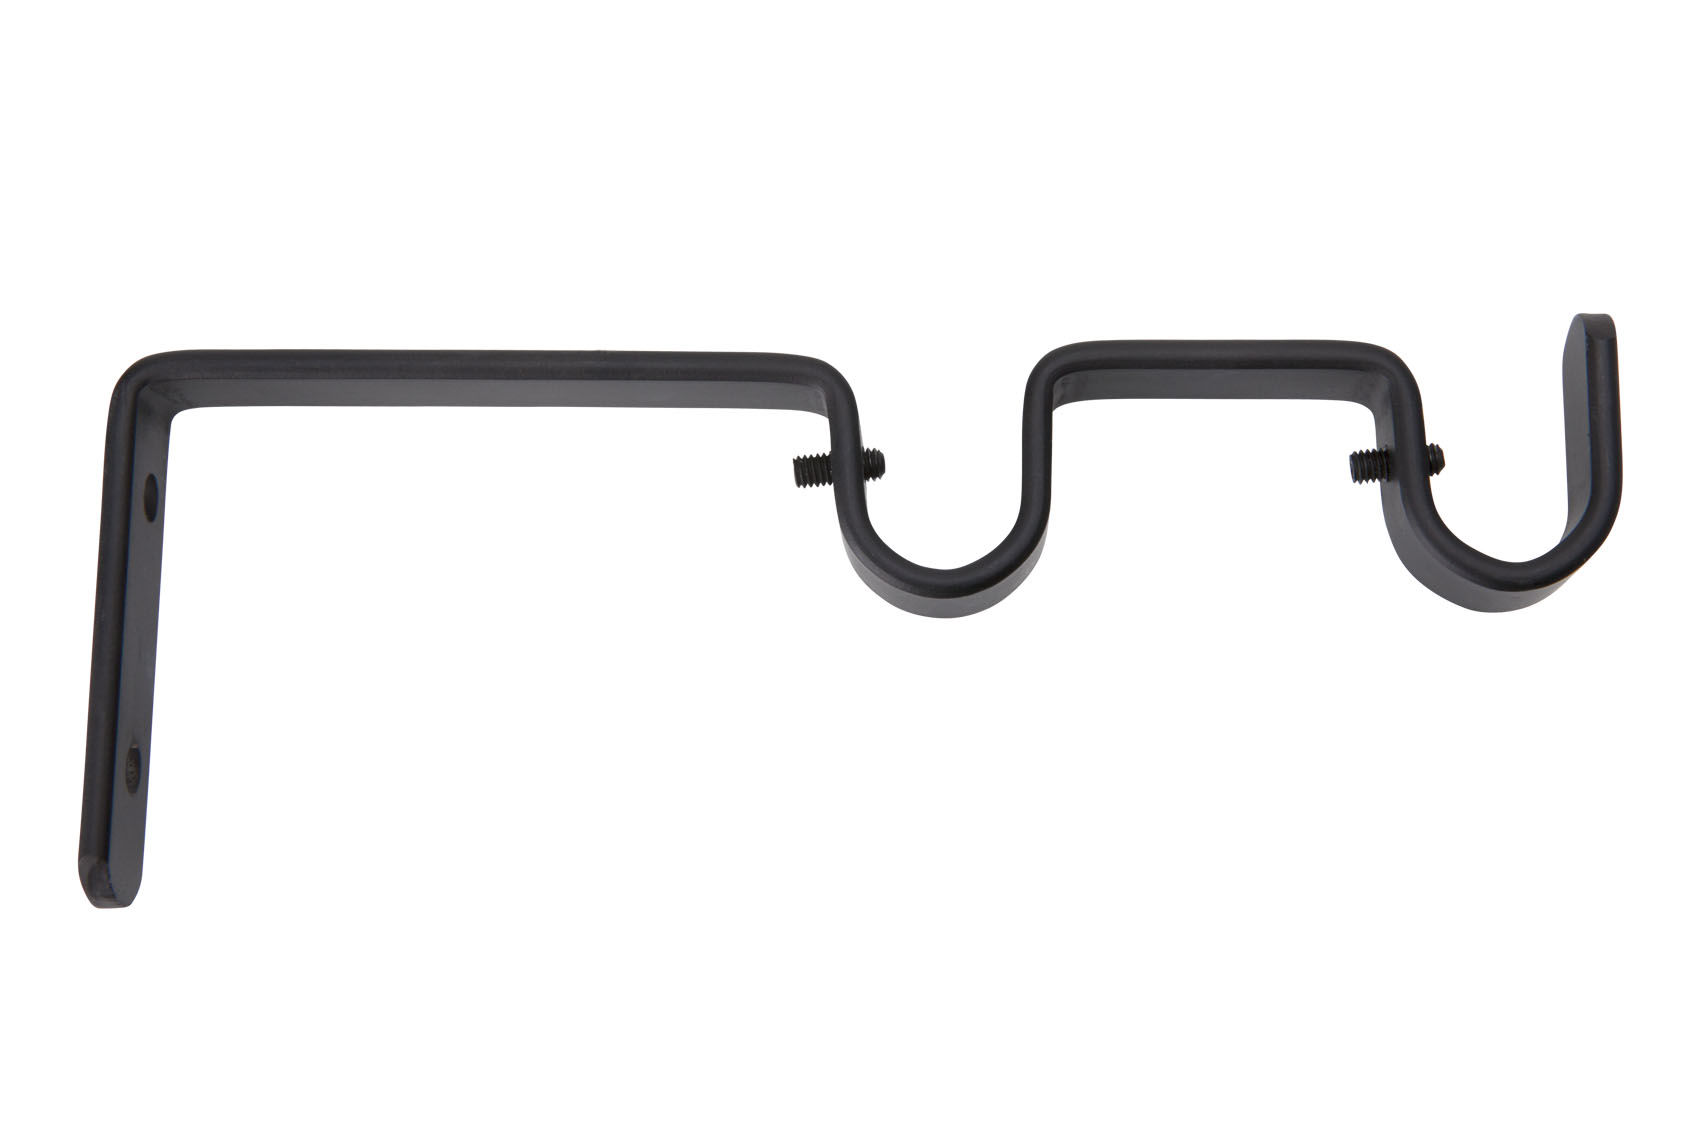 Doppel-Wandträger Aufleger für Gardinenstangen Ø 16 mm, schwarz, 2 Stück